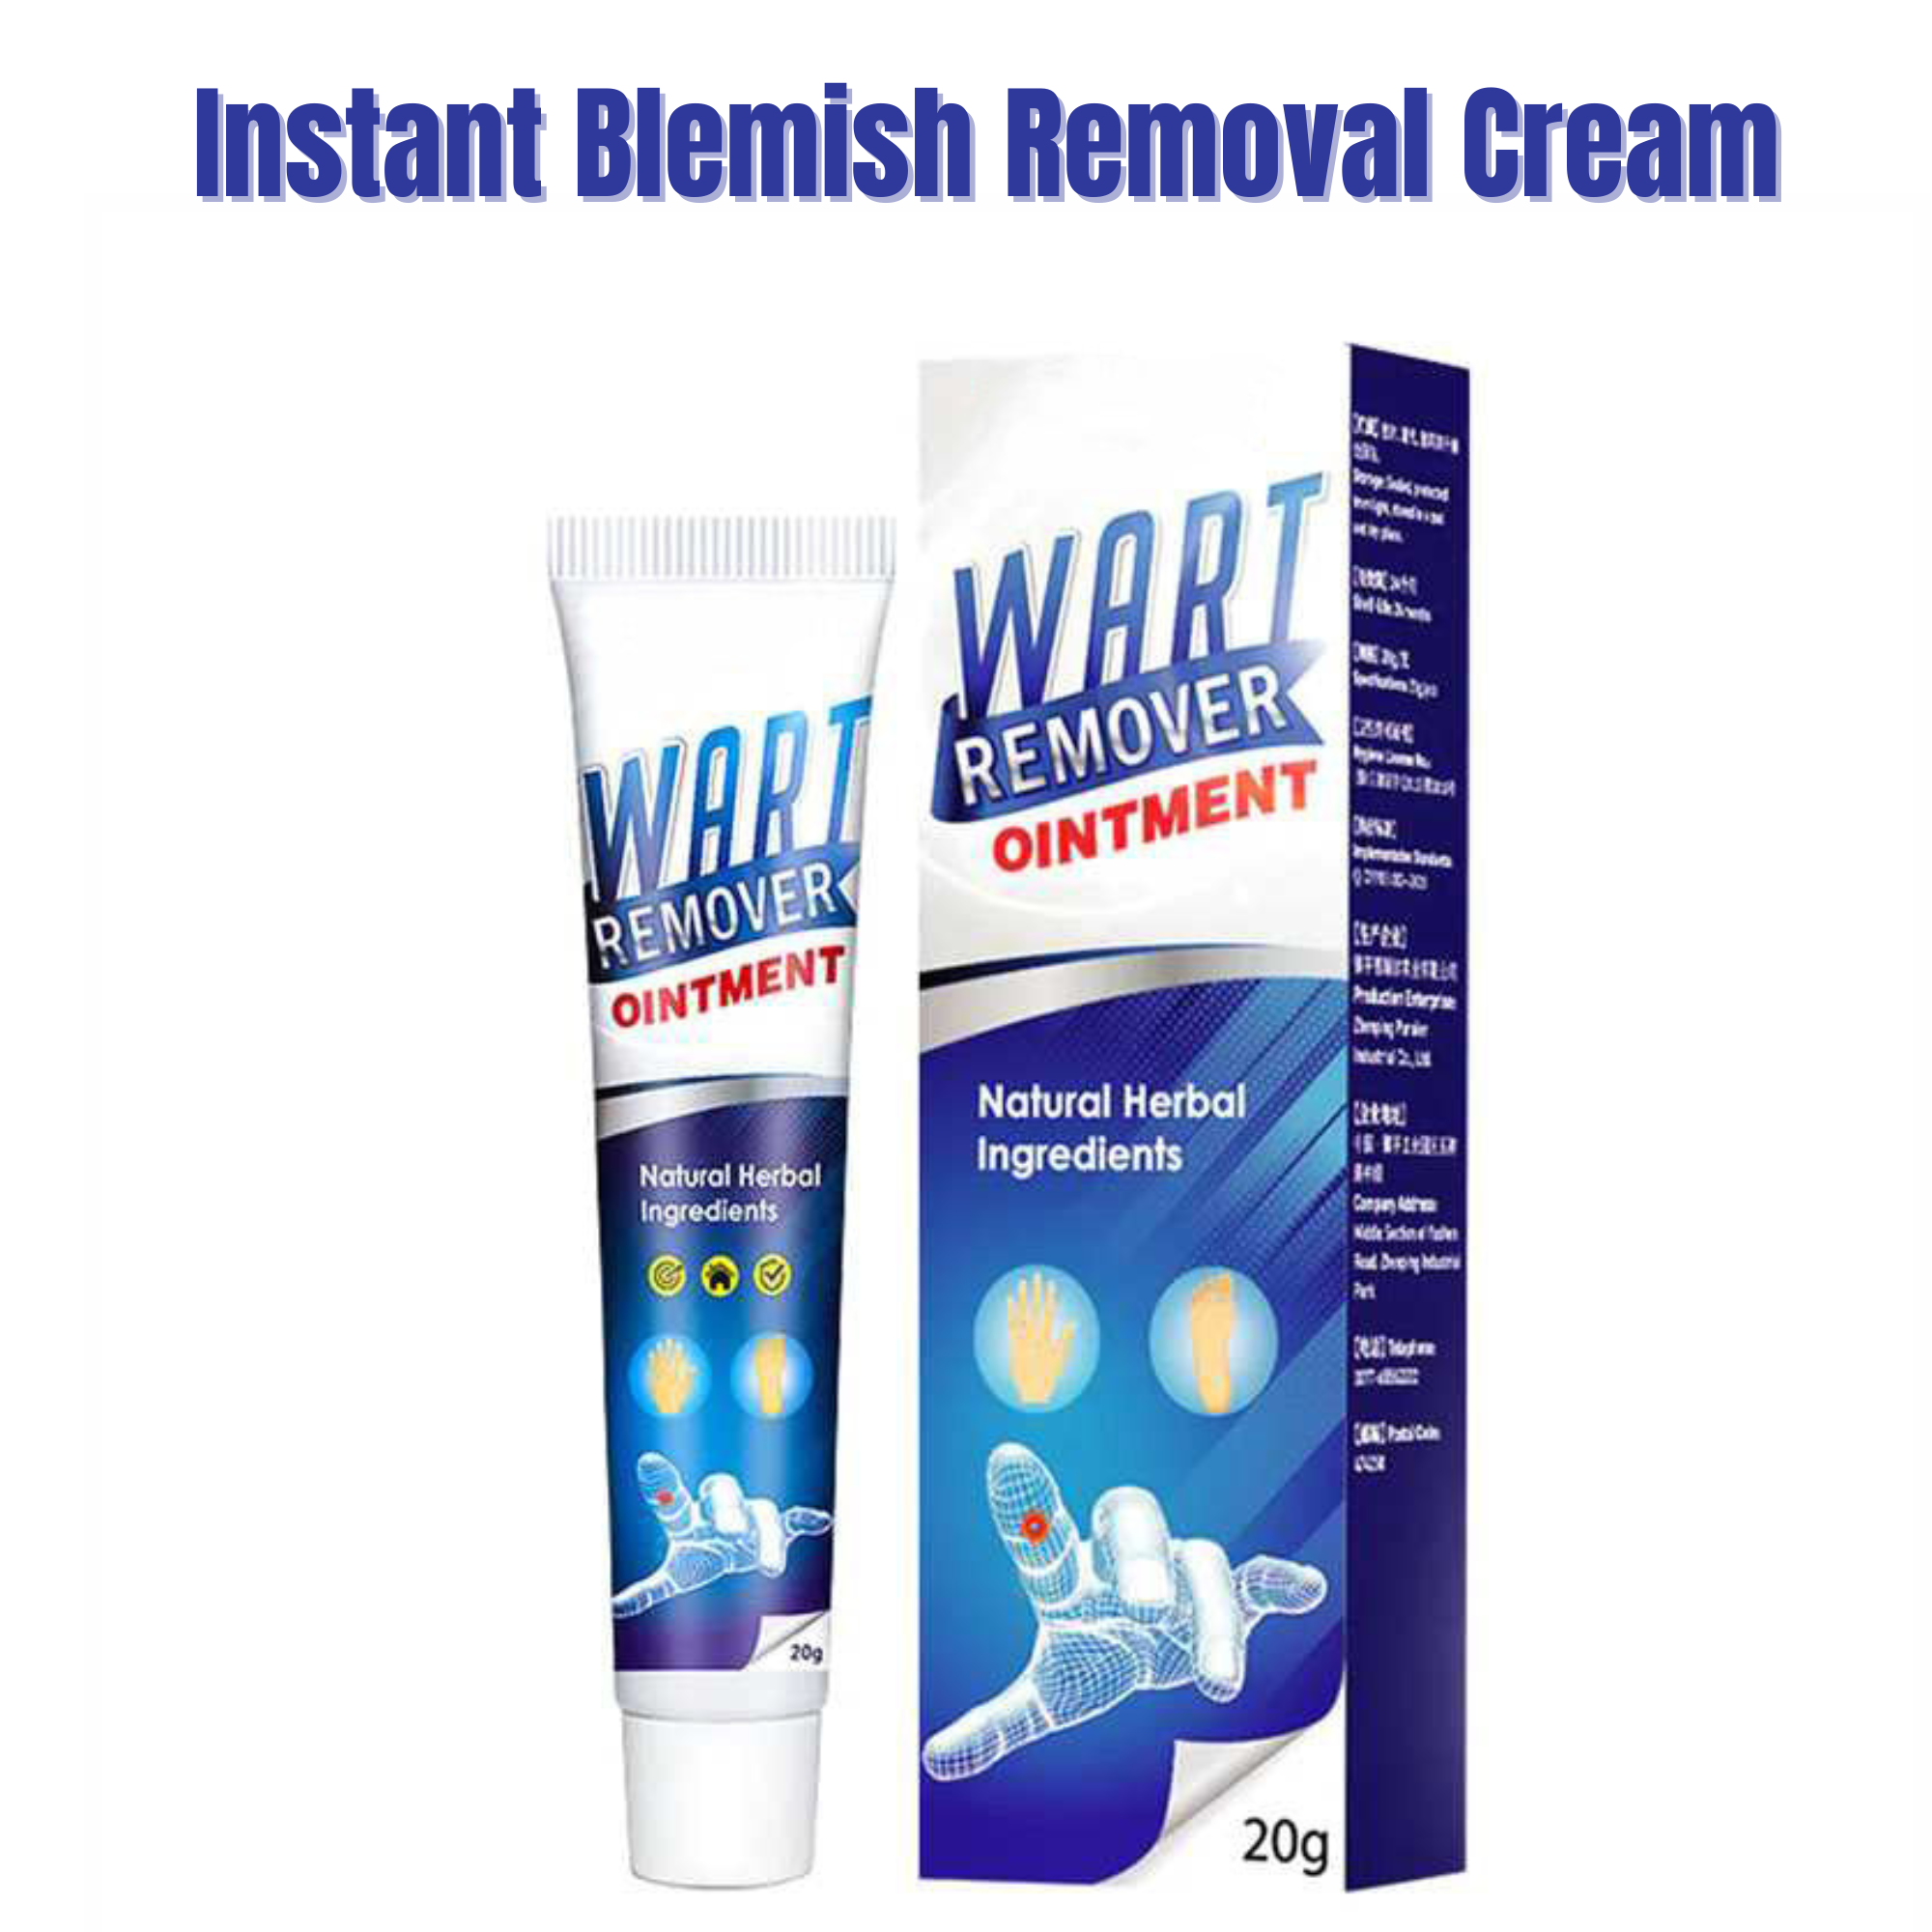 Instant Blemish Removal Cream